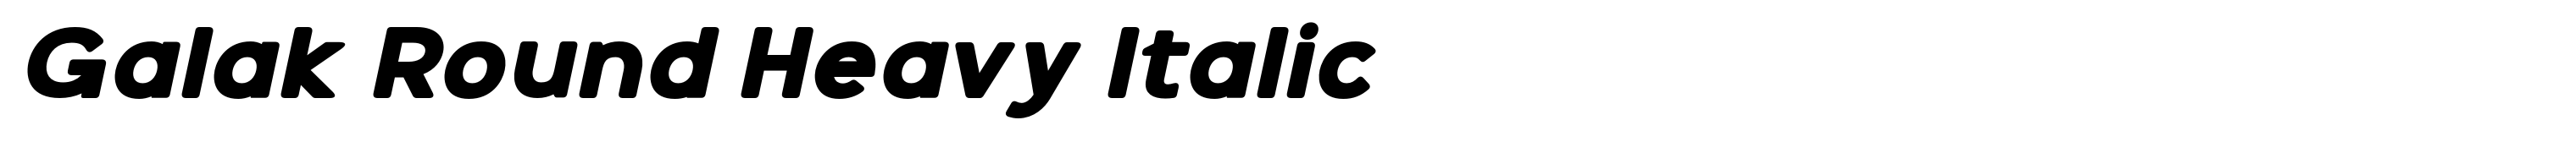 Galak Round Heavy Italic